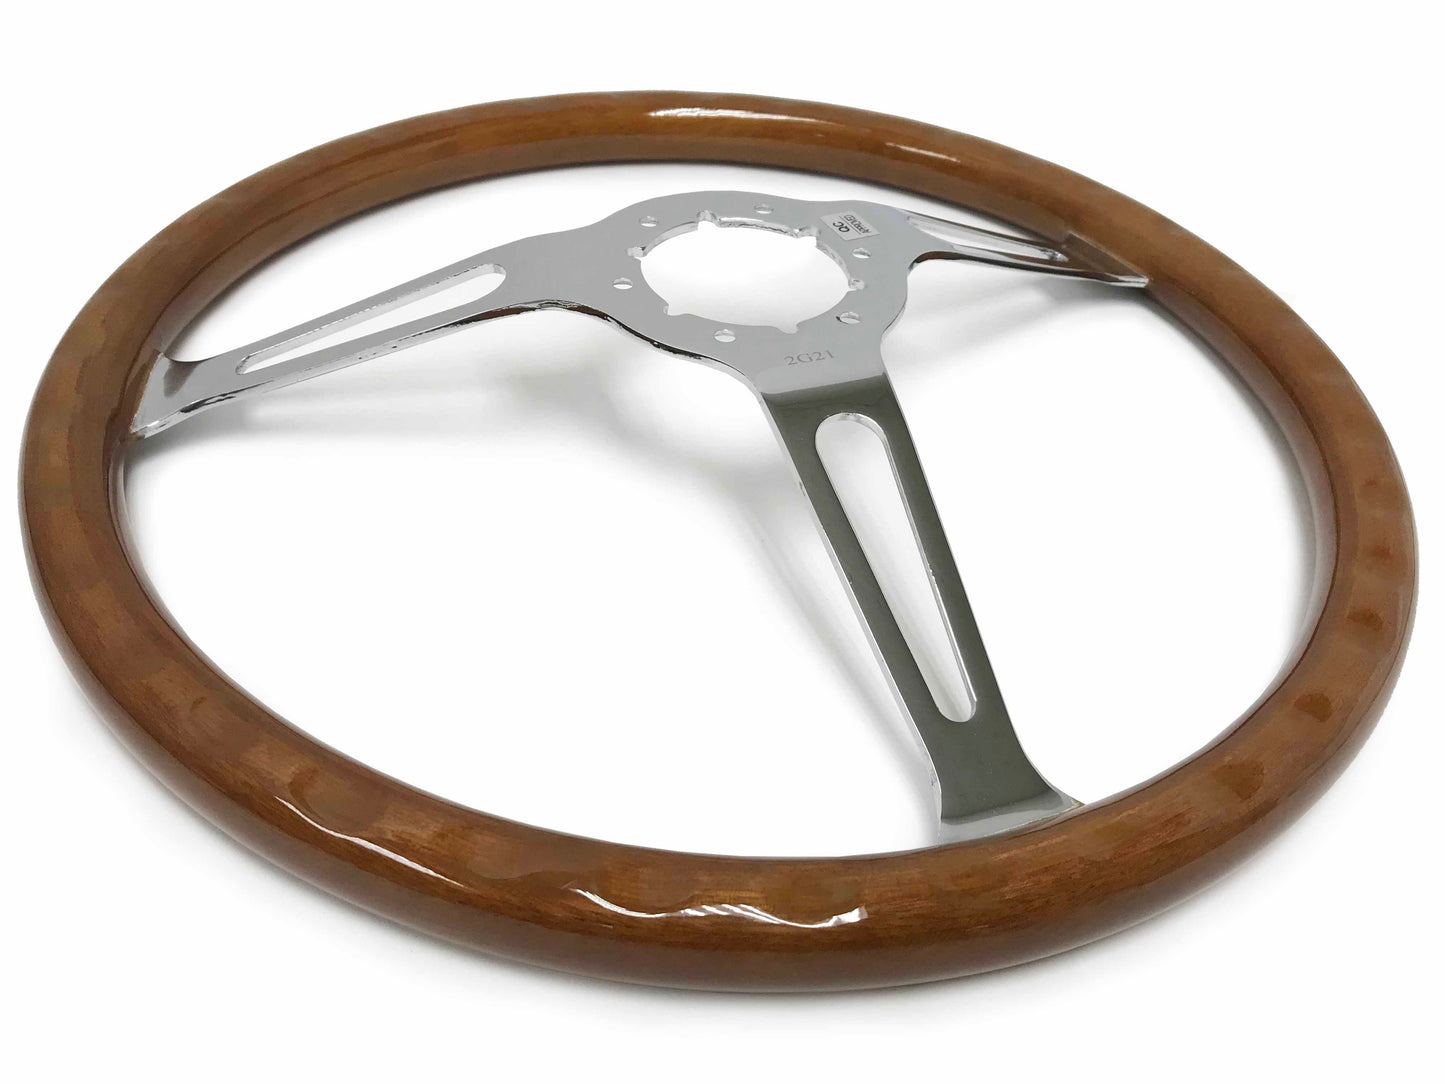 1965-67 Ford Mustang Steering Wheel Kit | Classic Wood